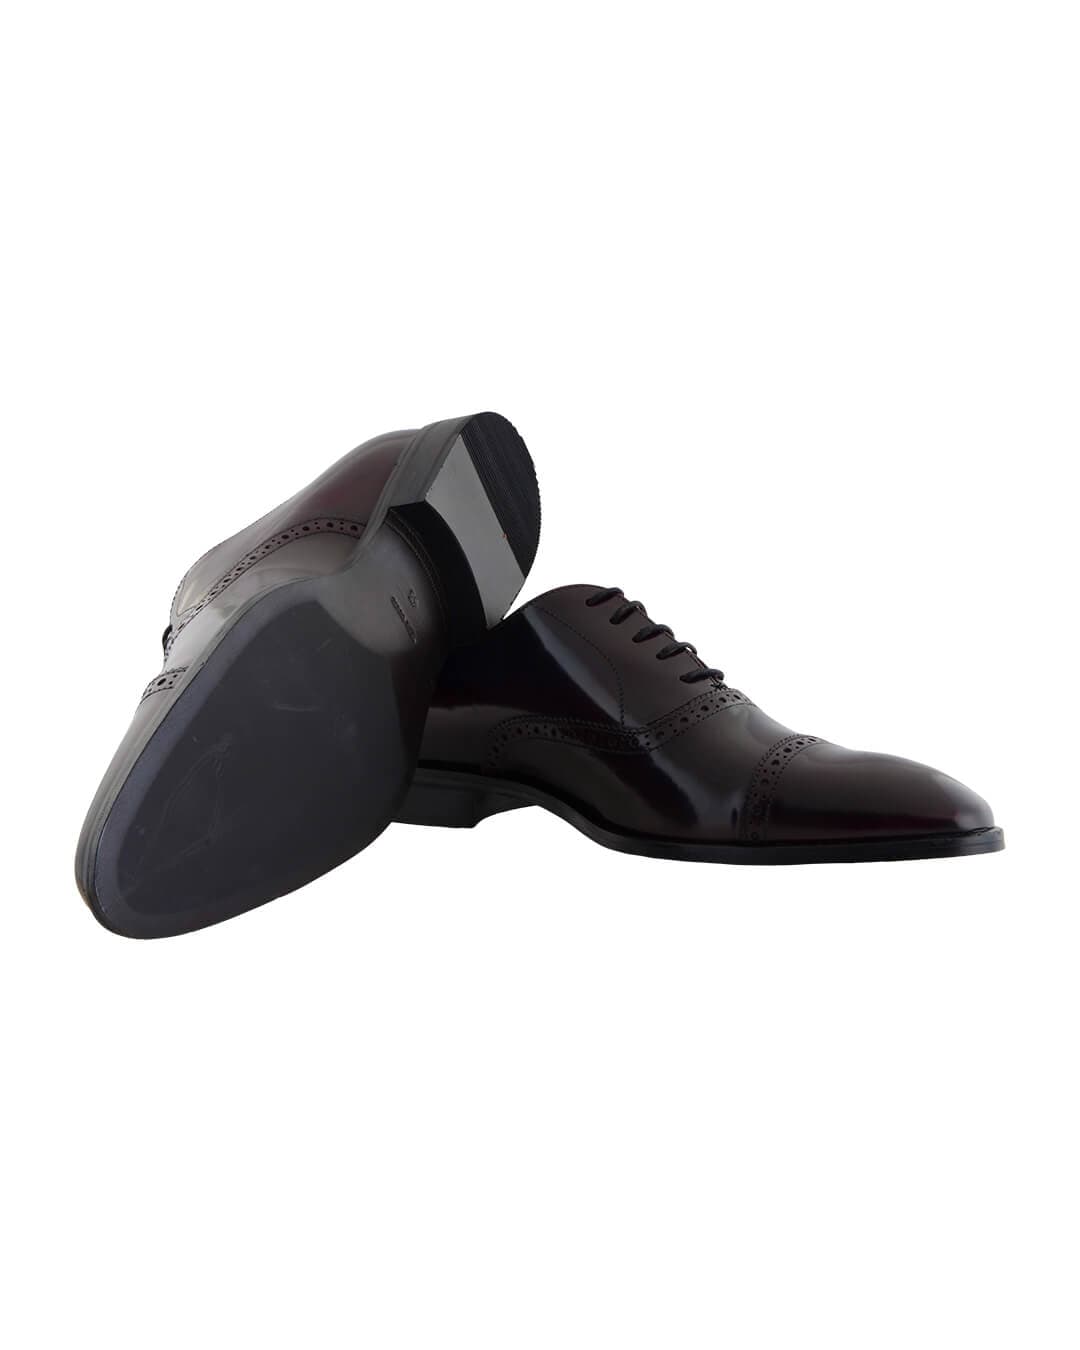 Gagliardi Shoes Gagliardi Burgundy Leather Oxford Brogues